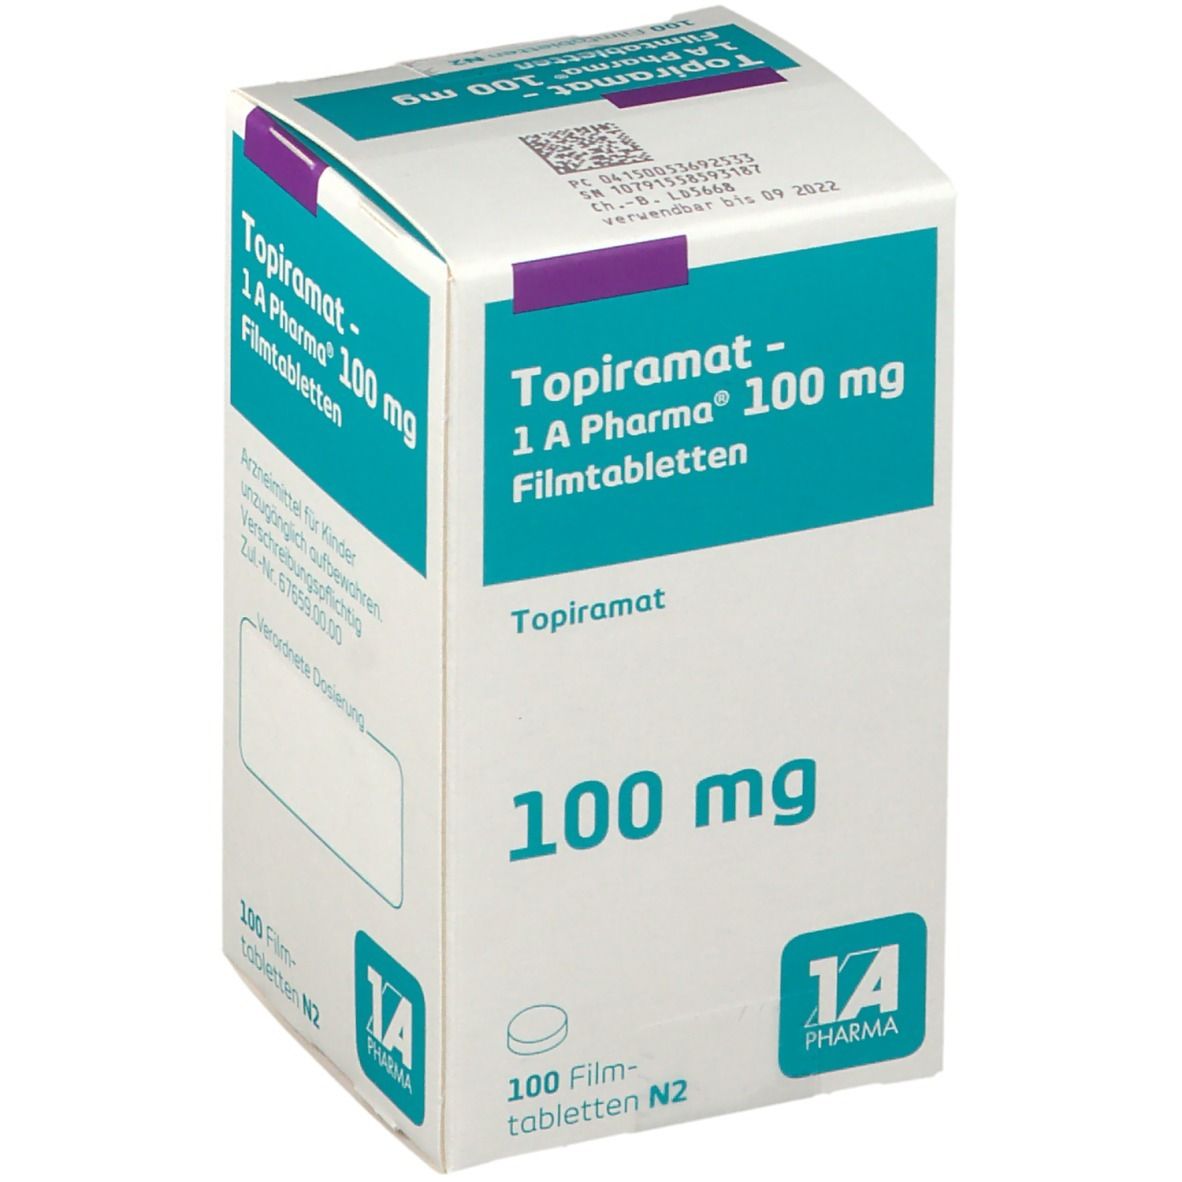 Topiramat - 1 A Pharma® 100 mg